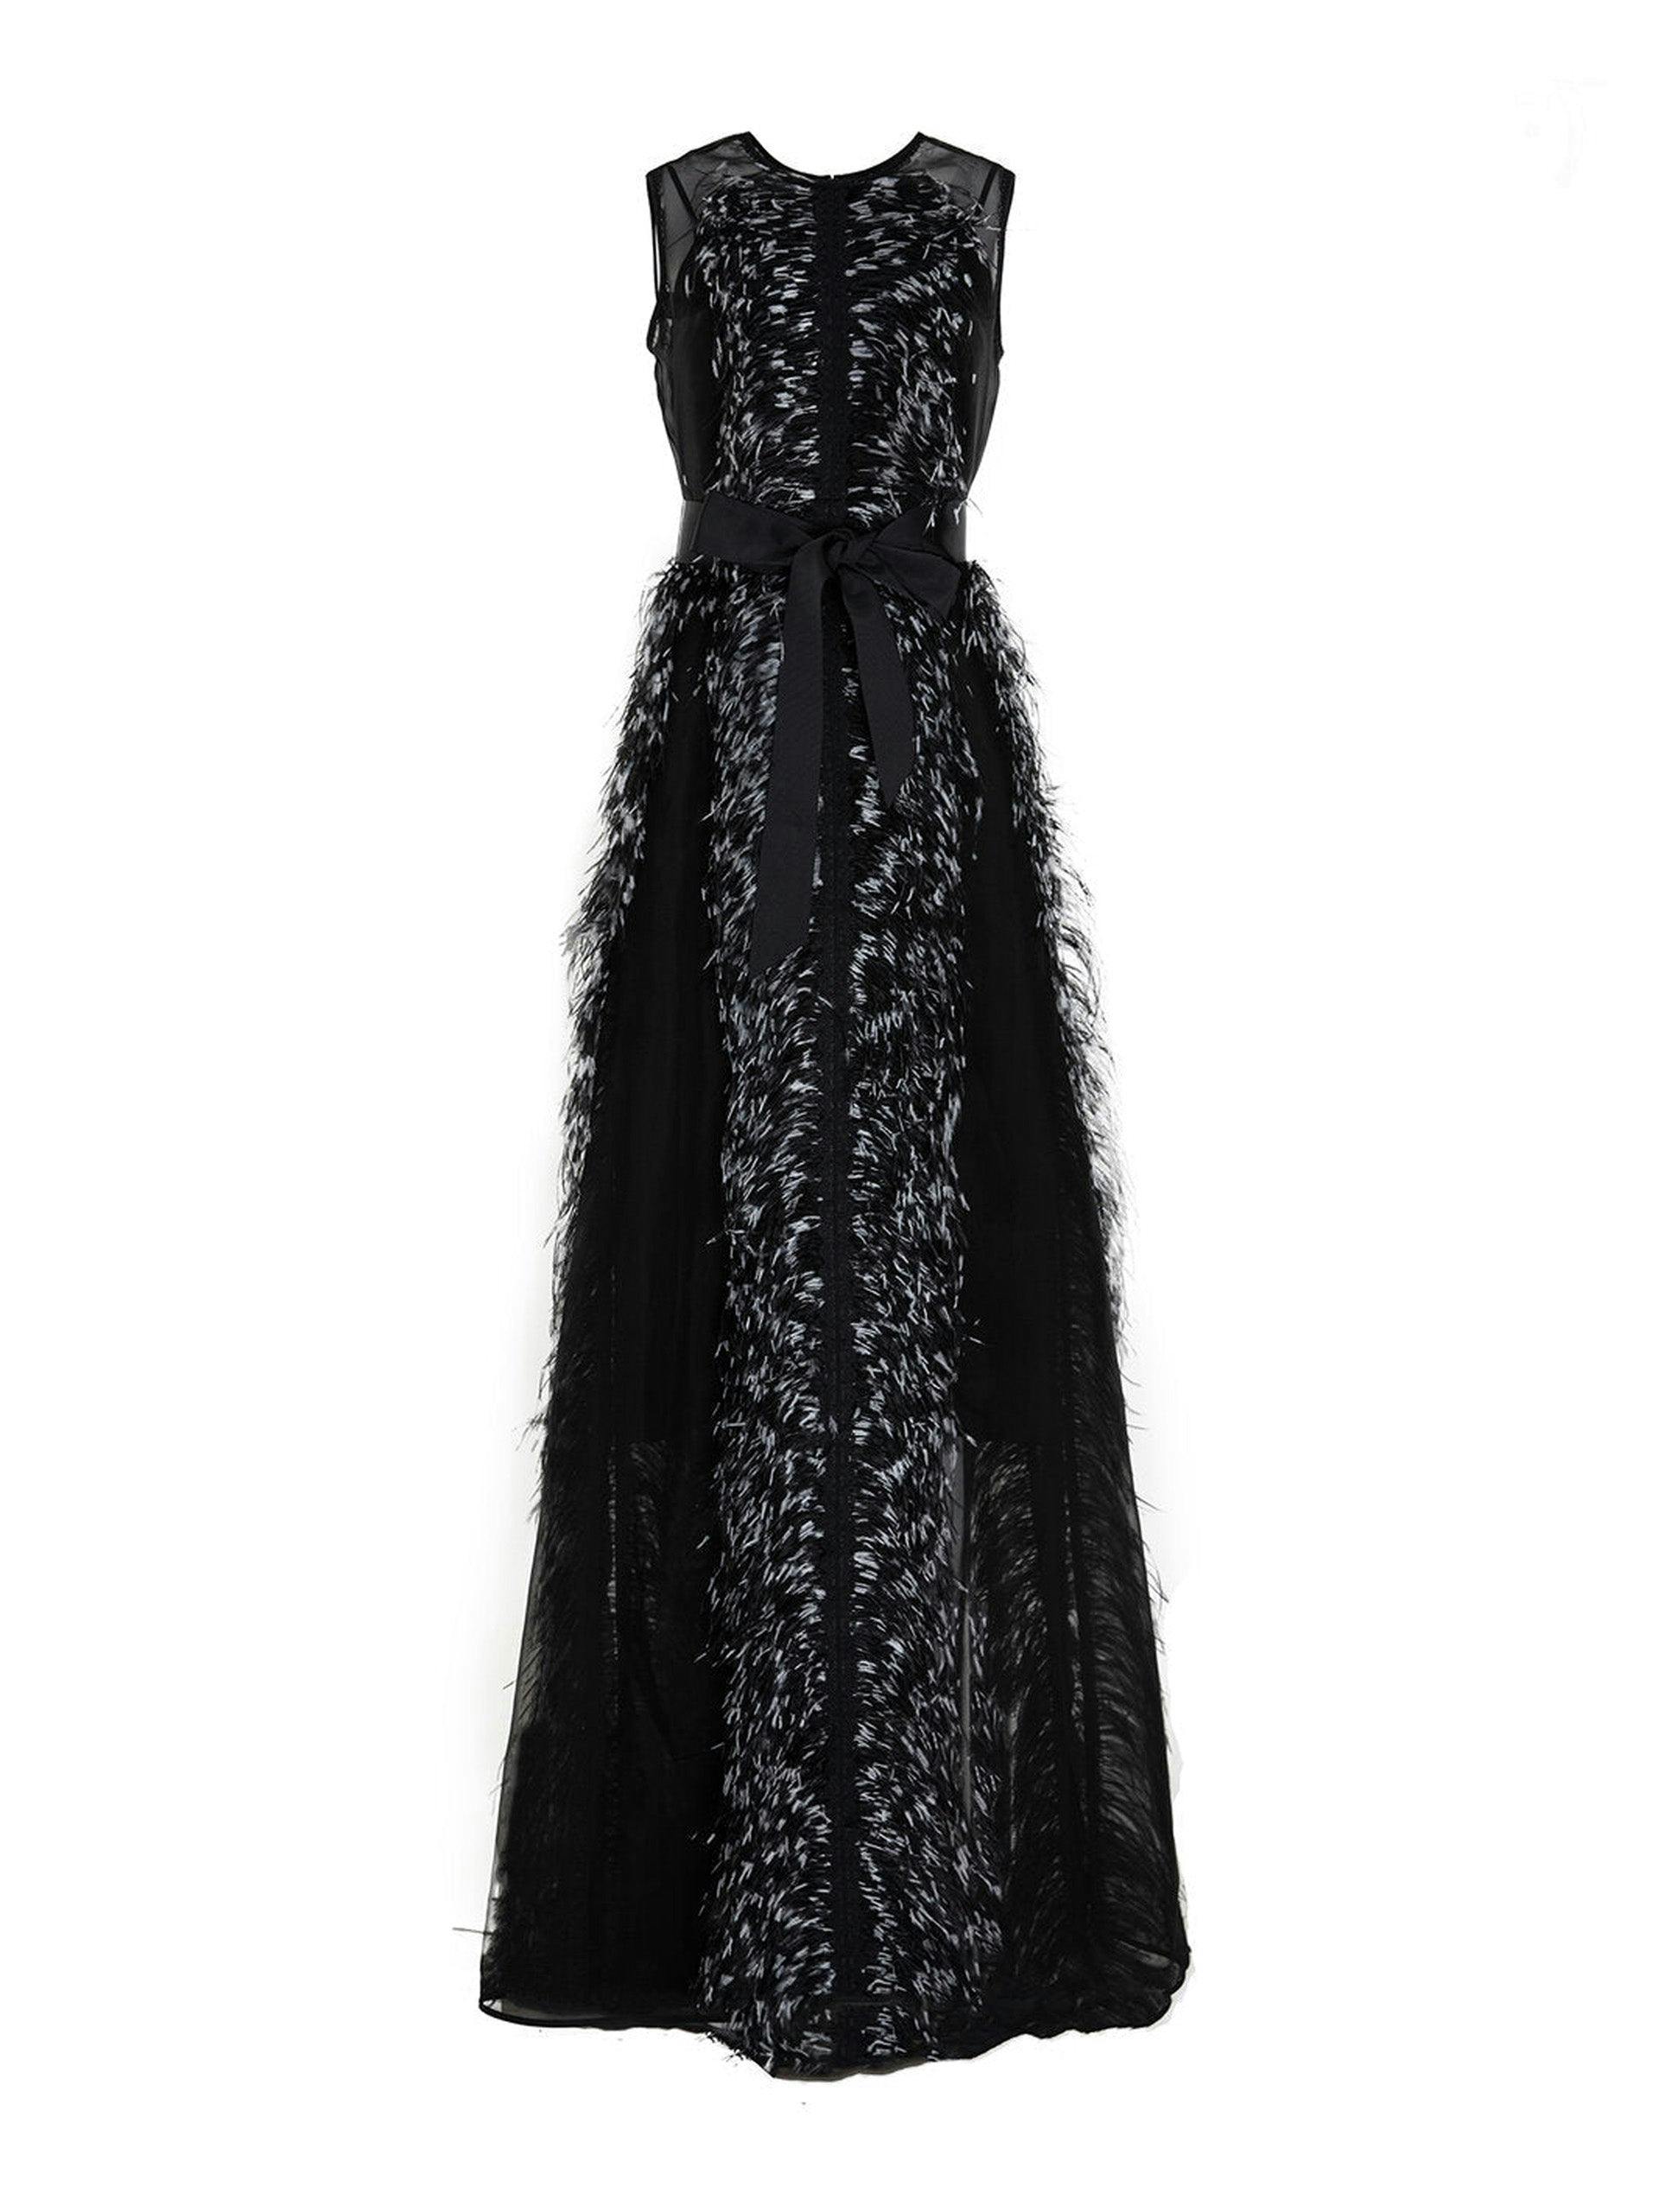 Beau black organza gown